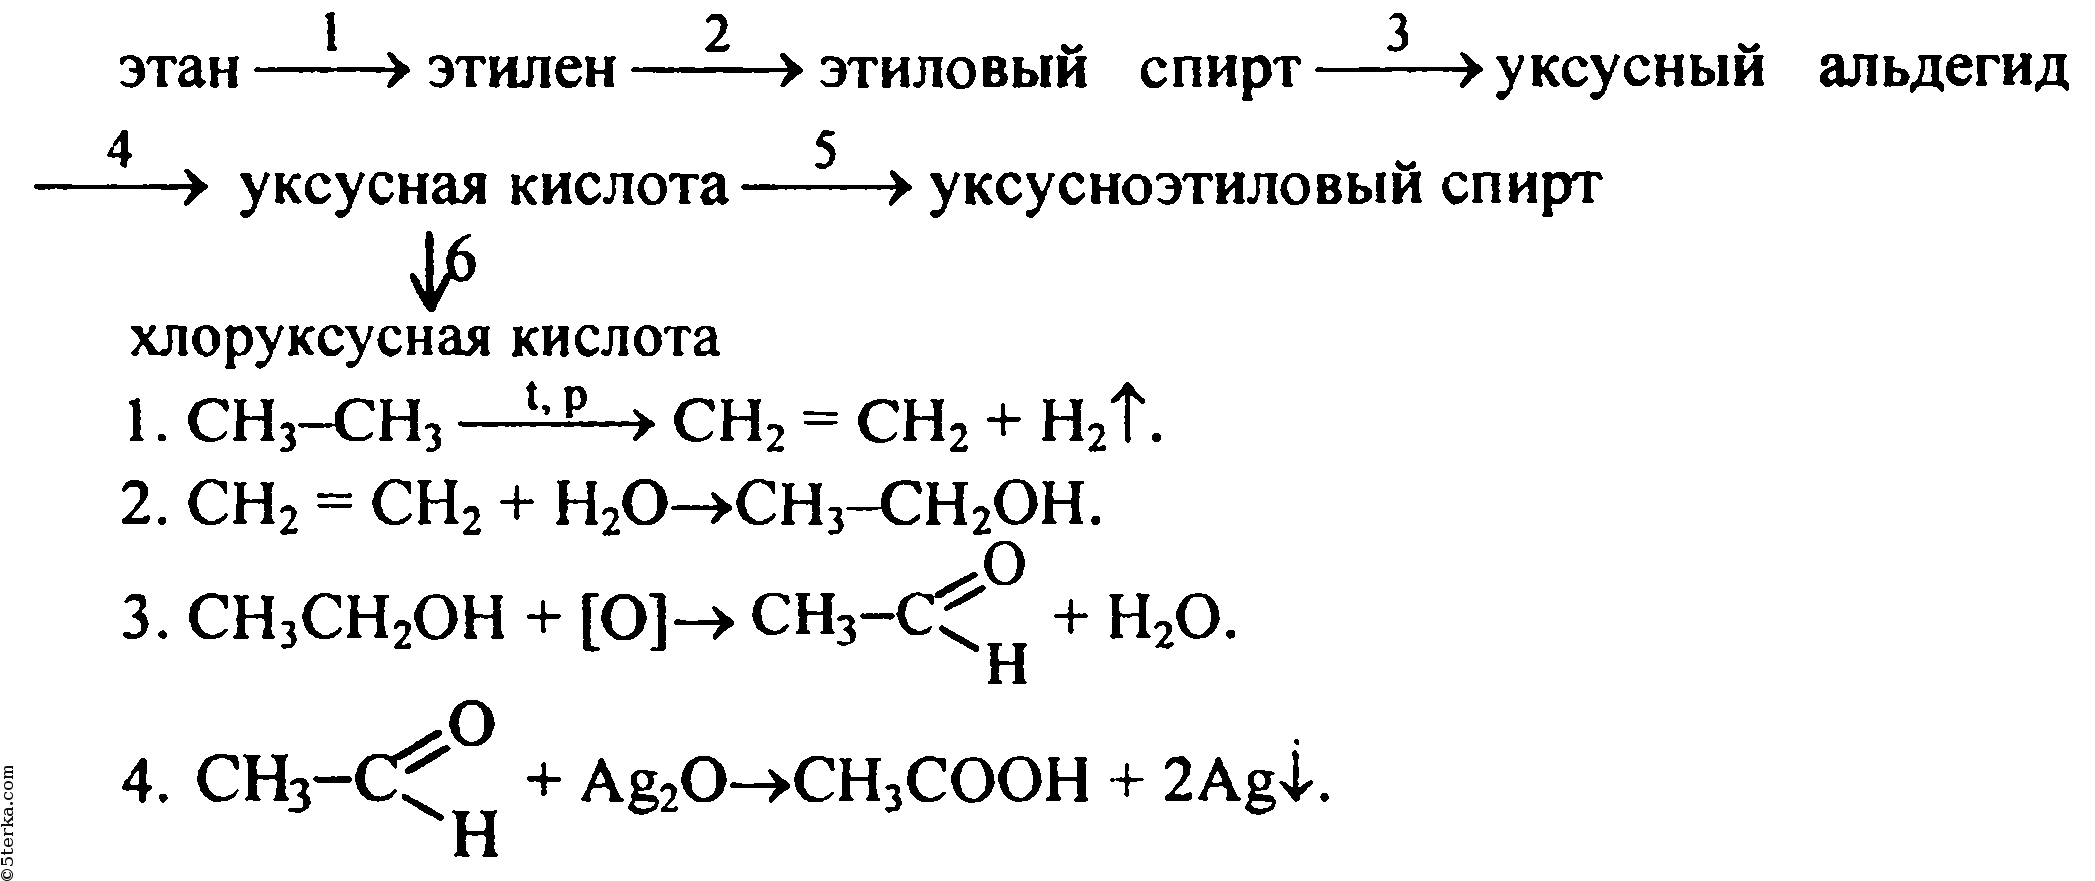 Схема получения альдегидов из метана. Схема реакции уксусной кислоты. Этилен хлорэтан бутан